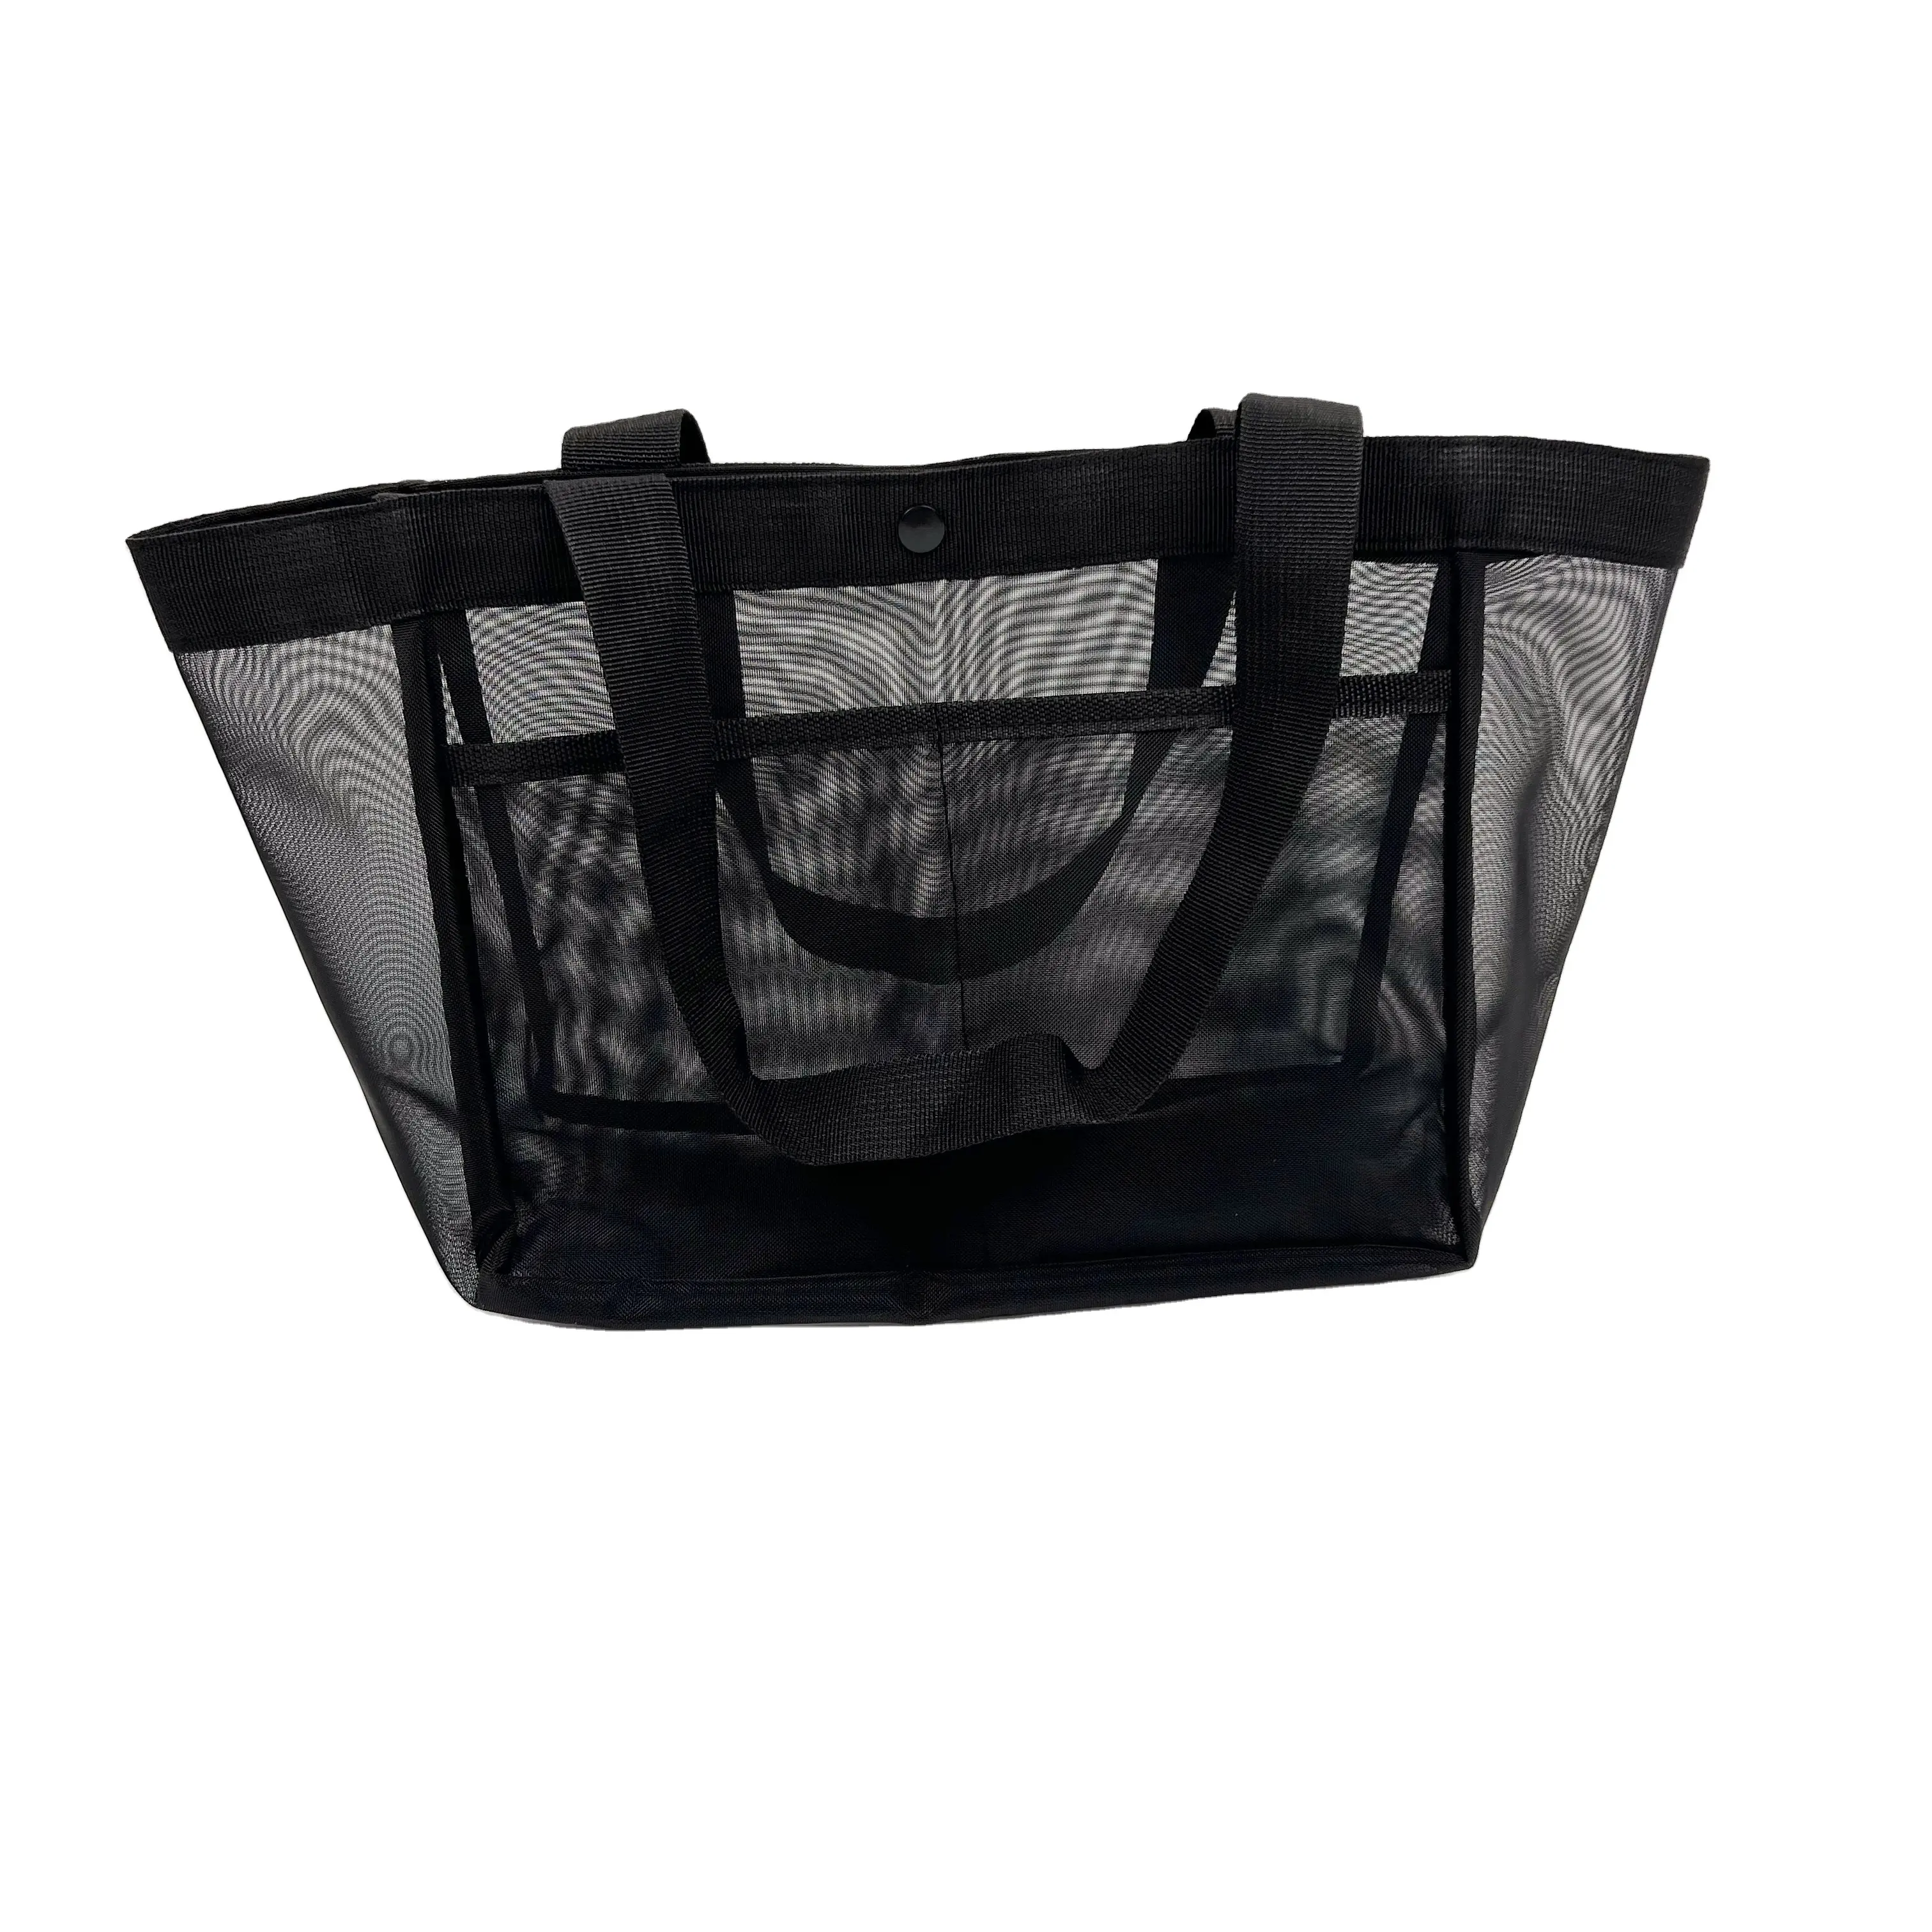 Good Selling Mesh Tote Bag For Family Women Handles Reusable Nylon Beach Shopping Tote Bag